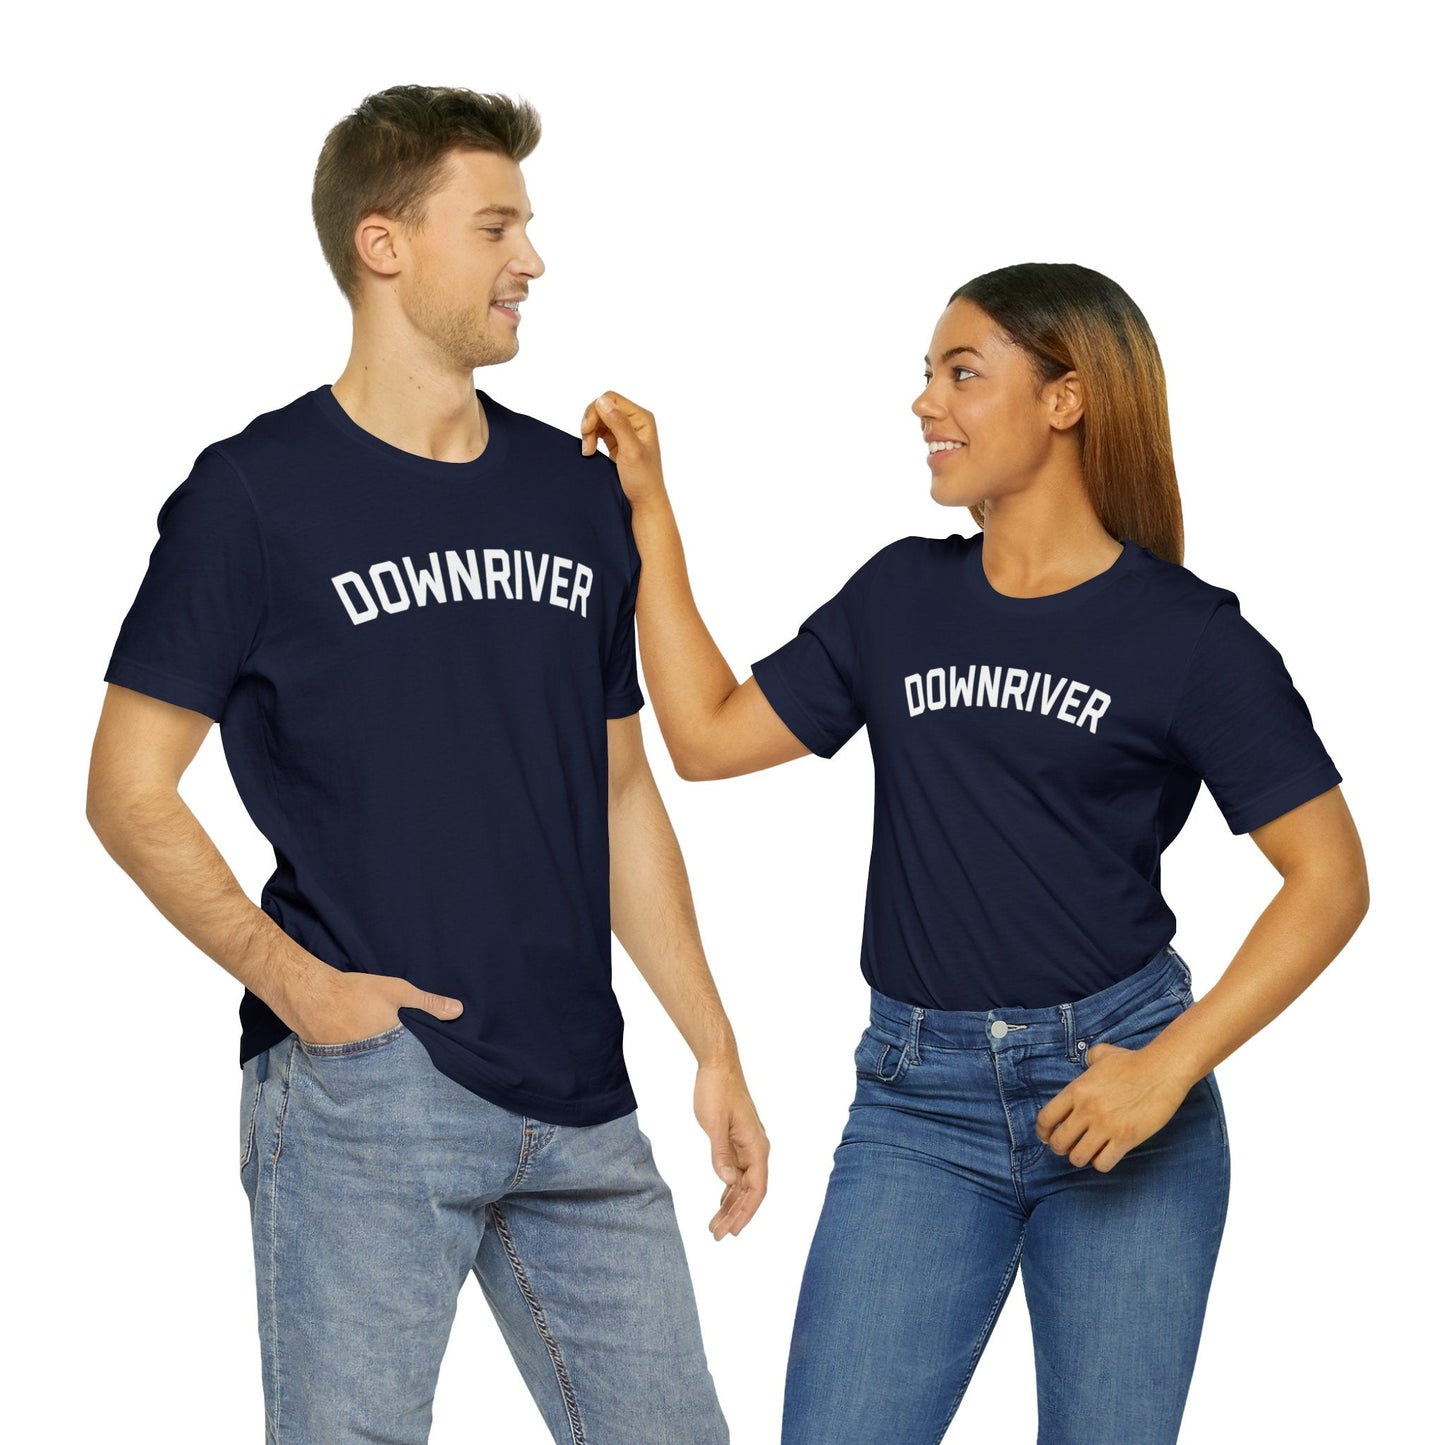 Downriver 11 Varsity Soft Jersey T Shirt | Downriver Clothing Apparel | Detroit Michigan | Downriver World